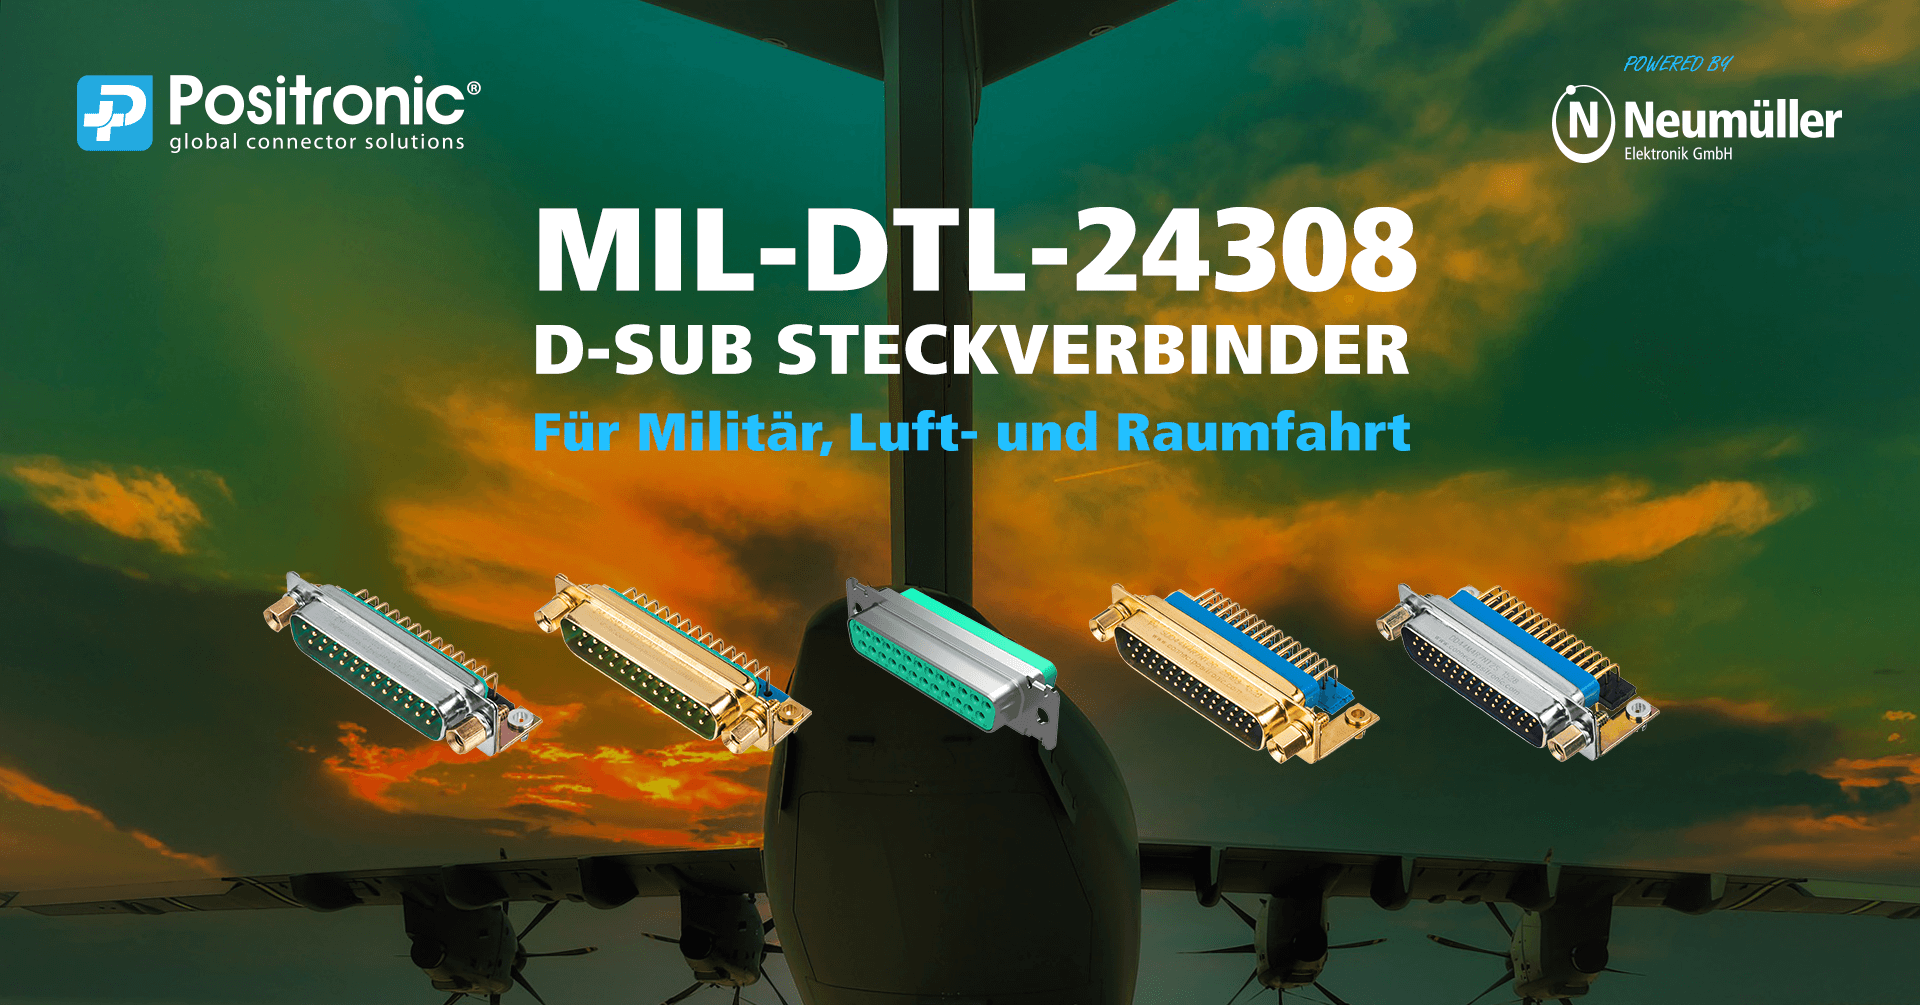 
MIL-DTL-24308 D-Sub connectors for military, aerospace and defense applications